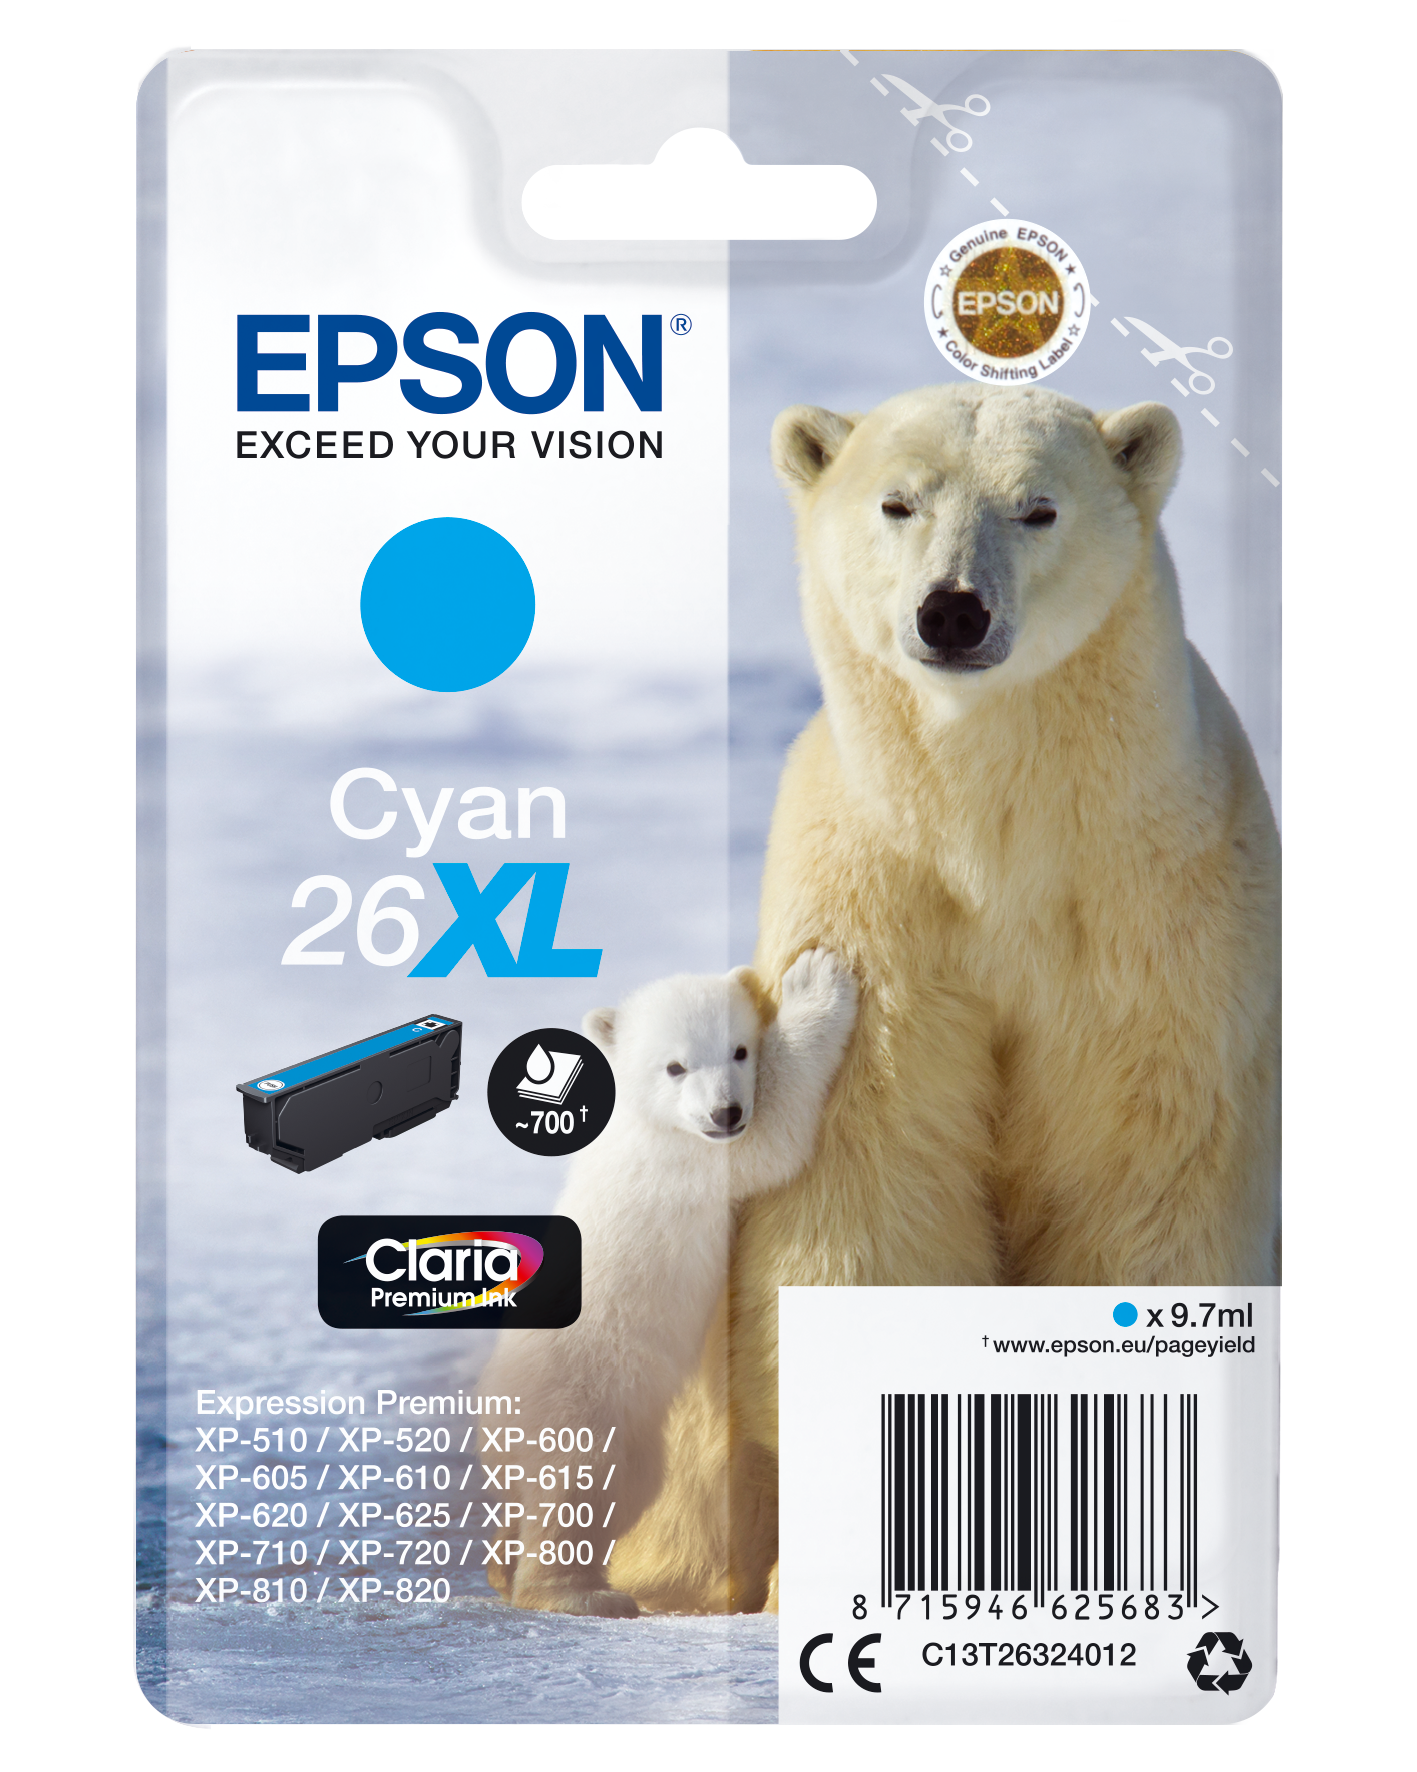 Epson Polar bear Singlepack Cyan 26XL Claria Premium Ink single pack / cyaan